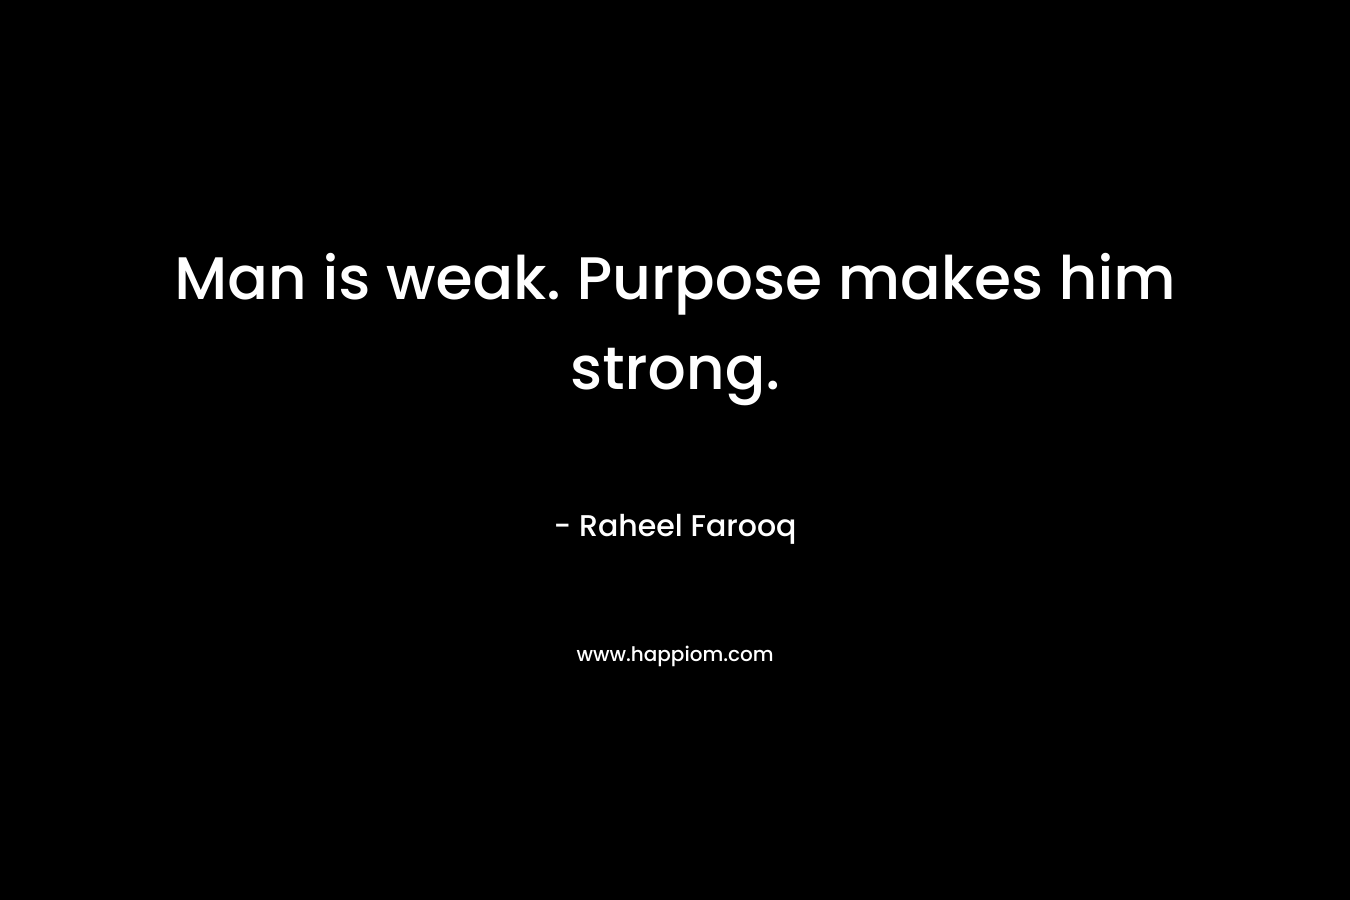 Man is weak. Purpose makes him strong.